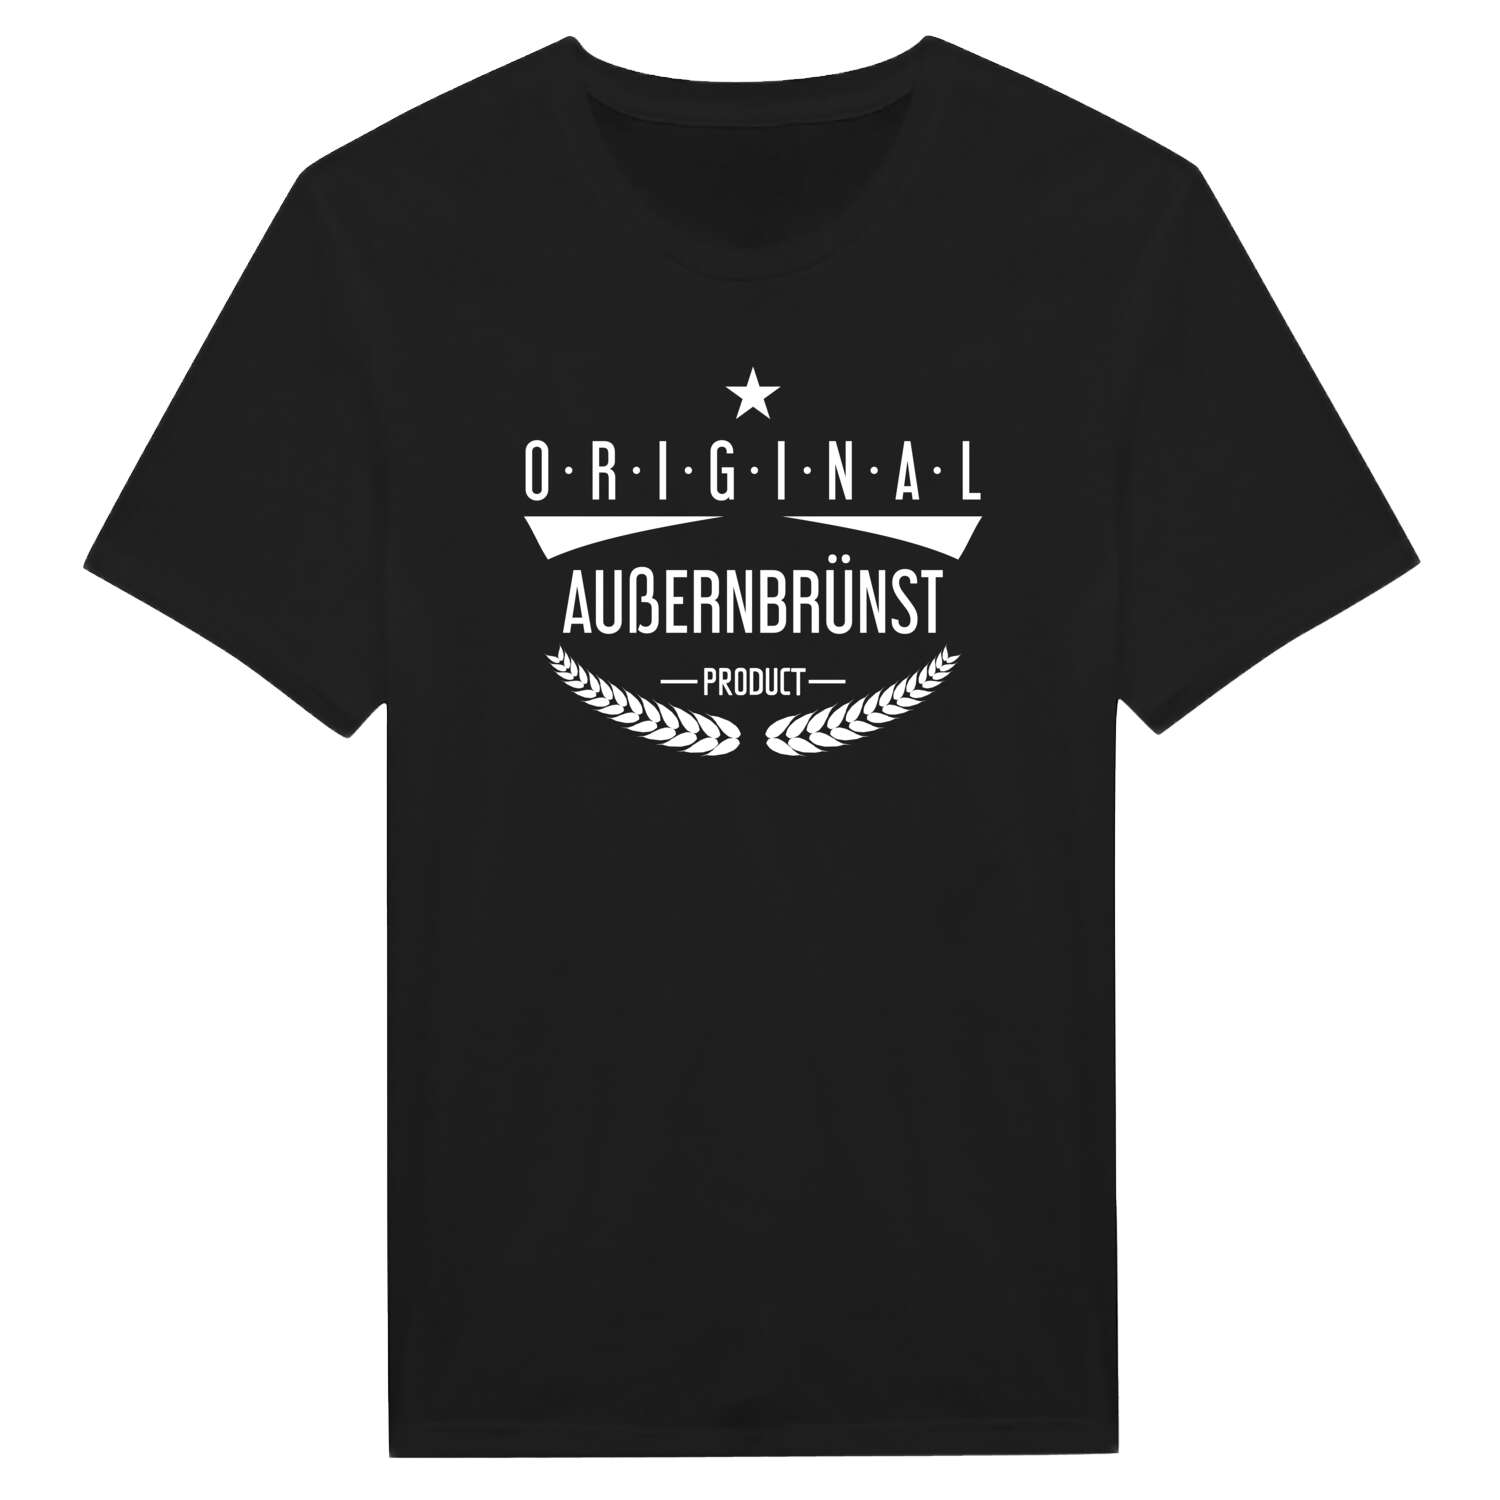 Außernbrünst T-Shirt »Original Product«